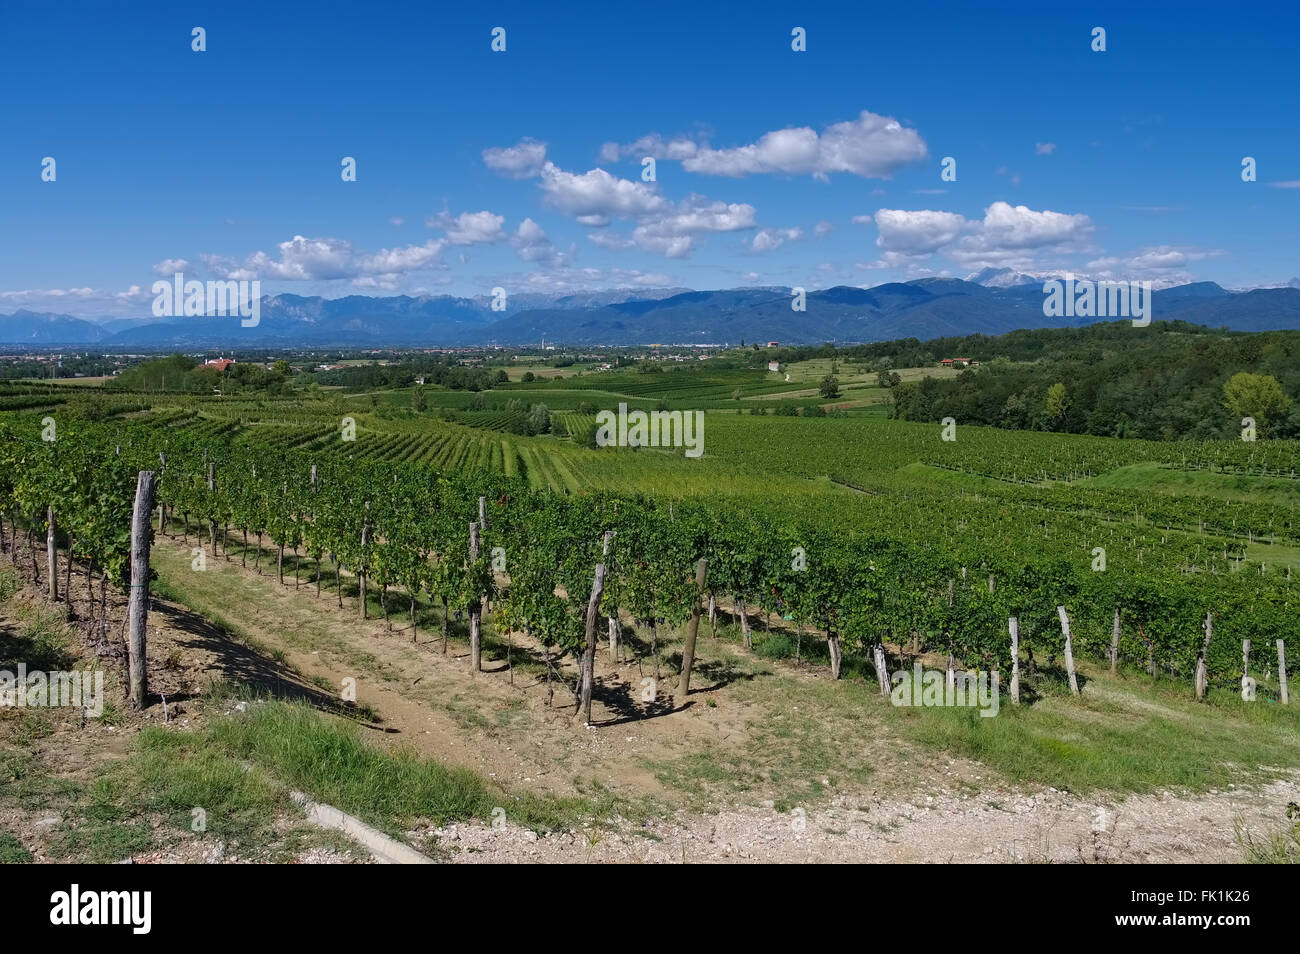 Friuli Weinberge in Norditalien - Friuli vigneti nel nord Italia Foto Stock